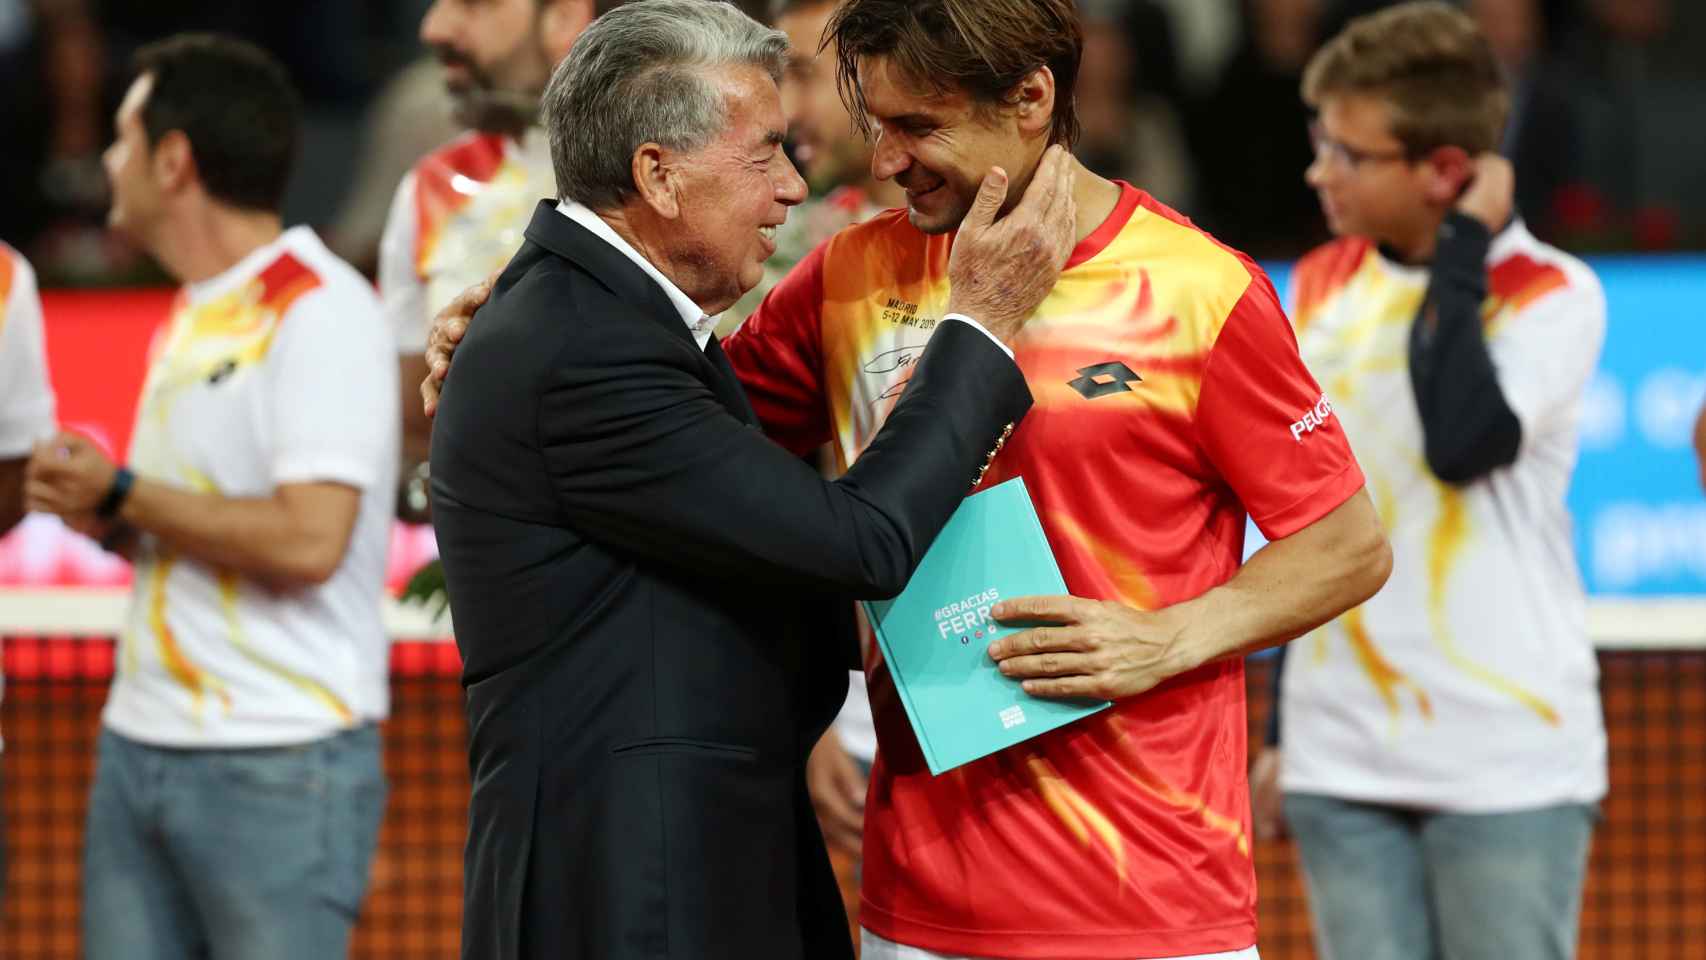 Homenaje a Ferrer tras caer en el Mutua Madrid Open